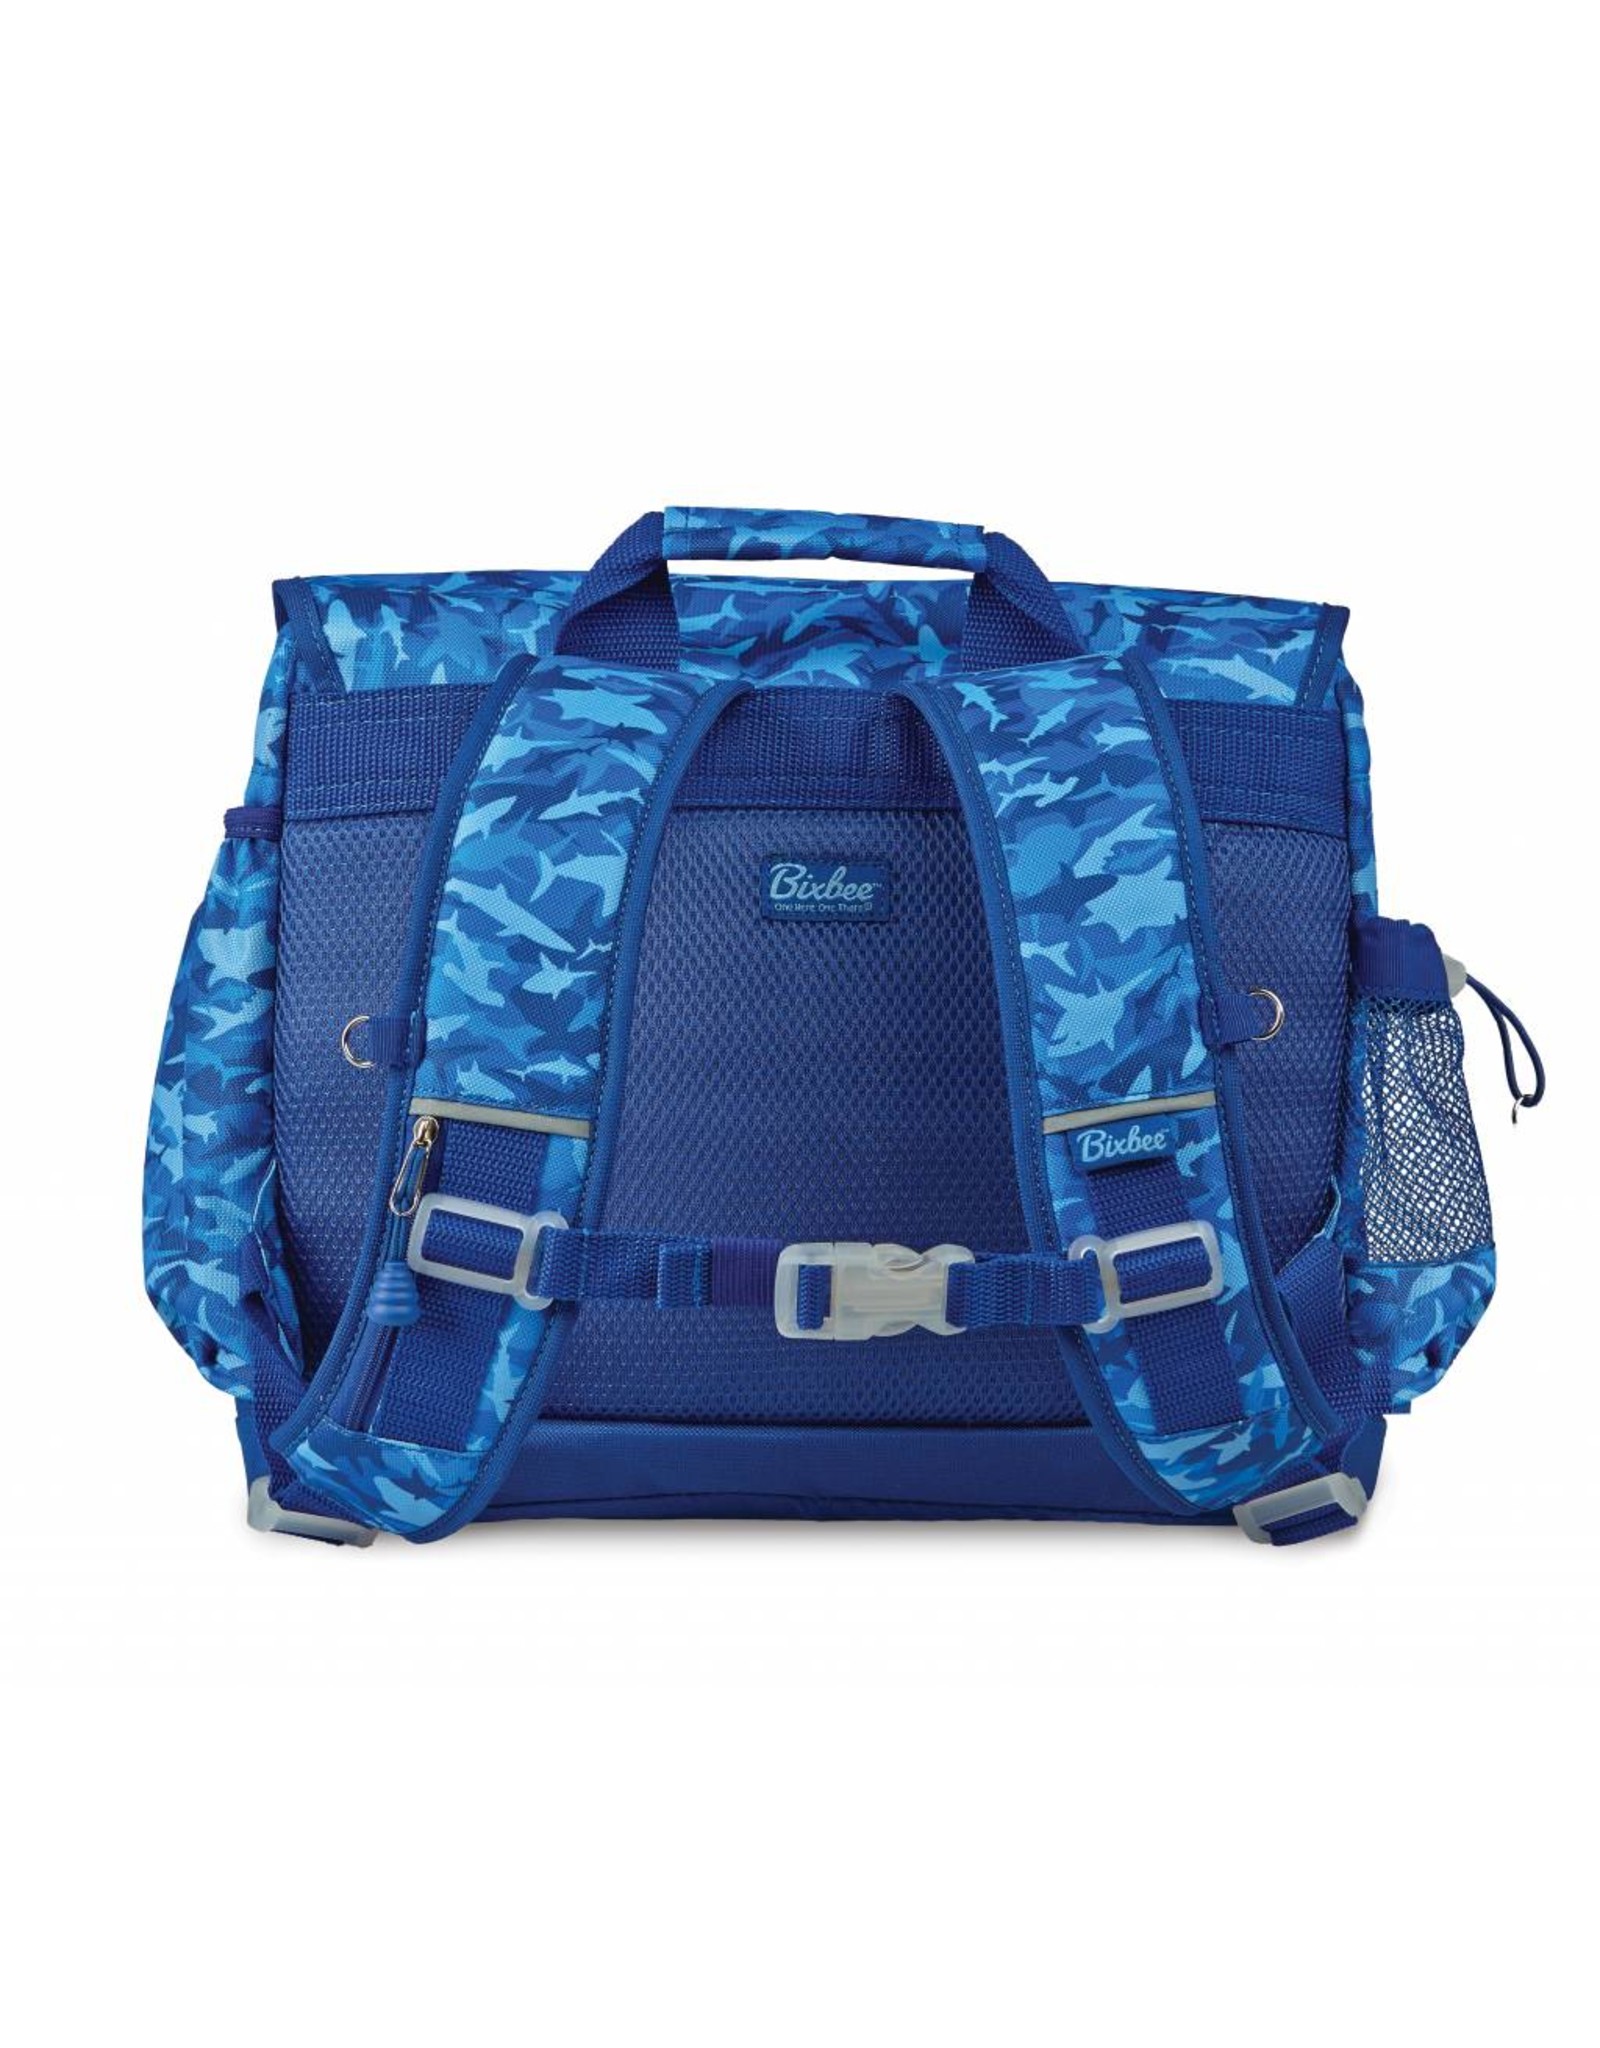 Bixbee Shark Camo Backpack (Large)